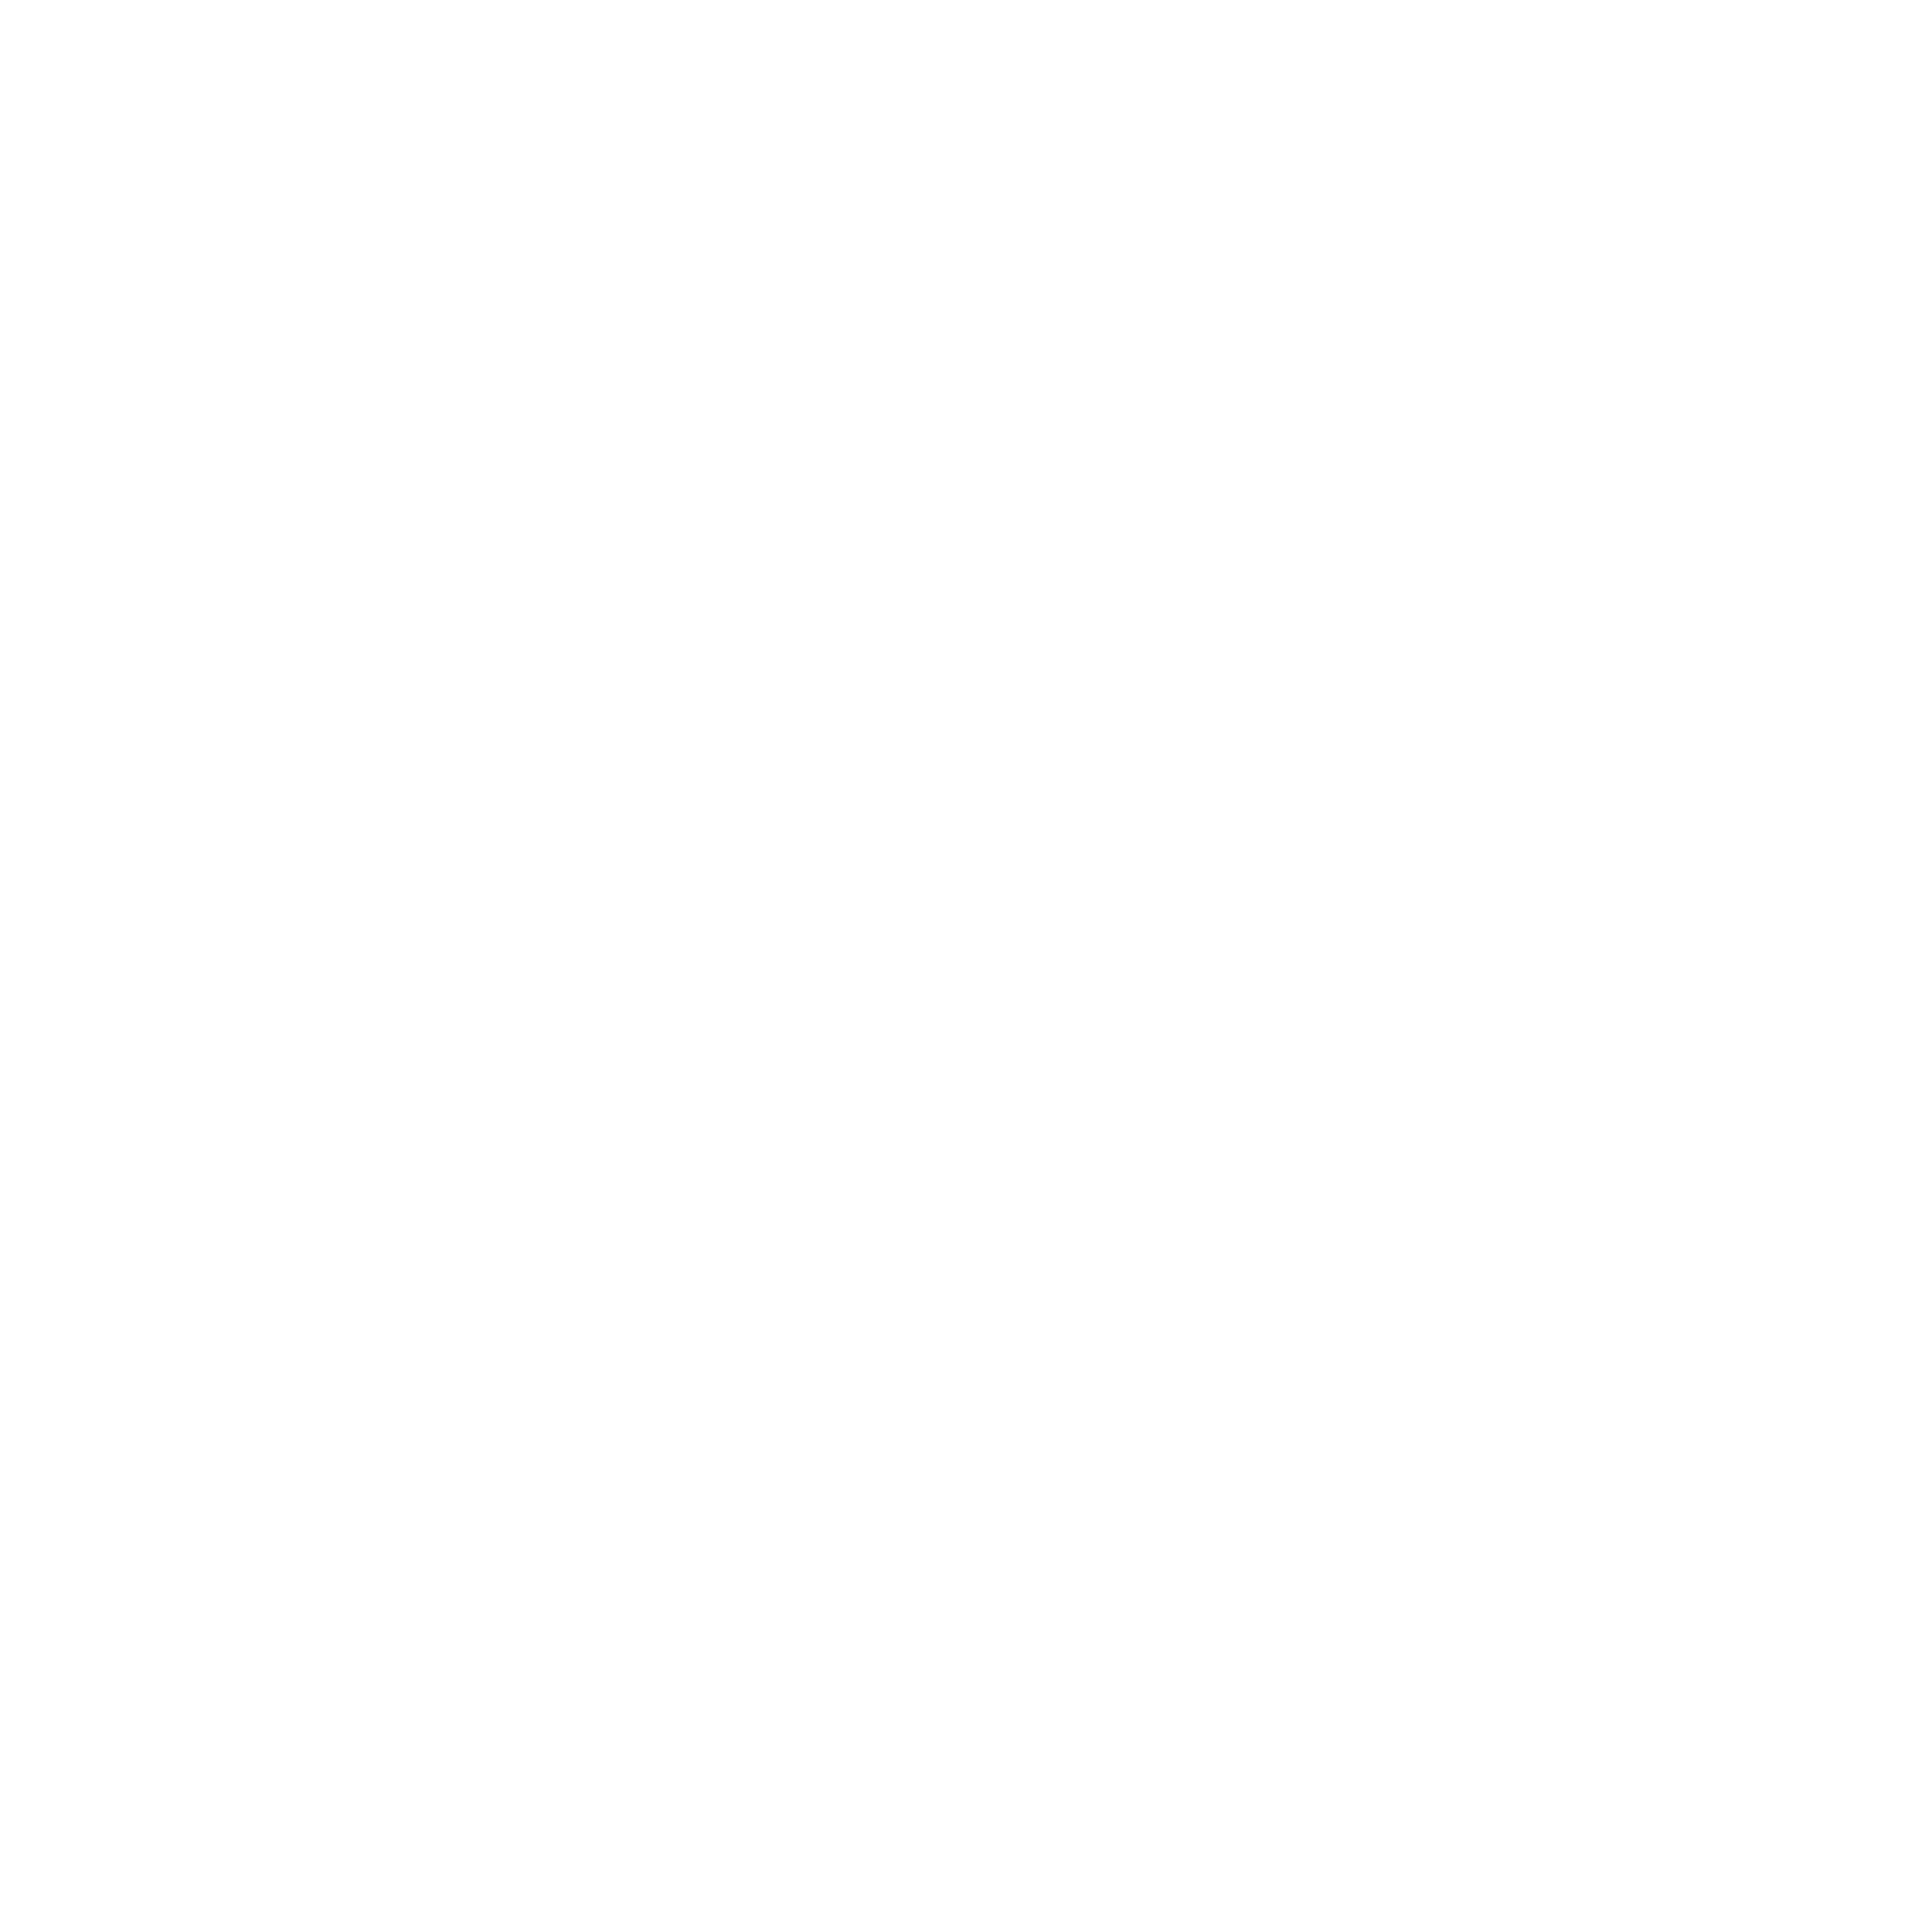 DISP-1